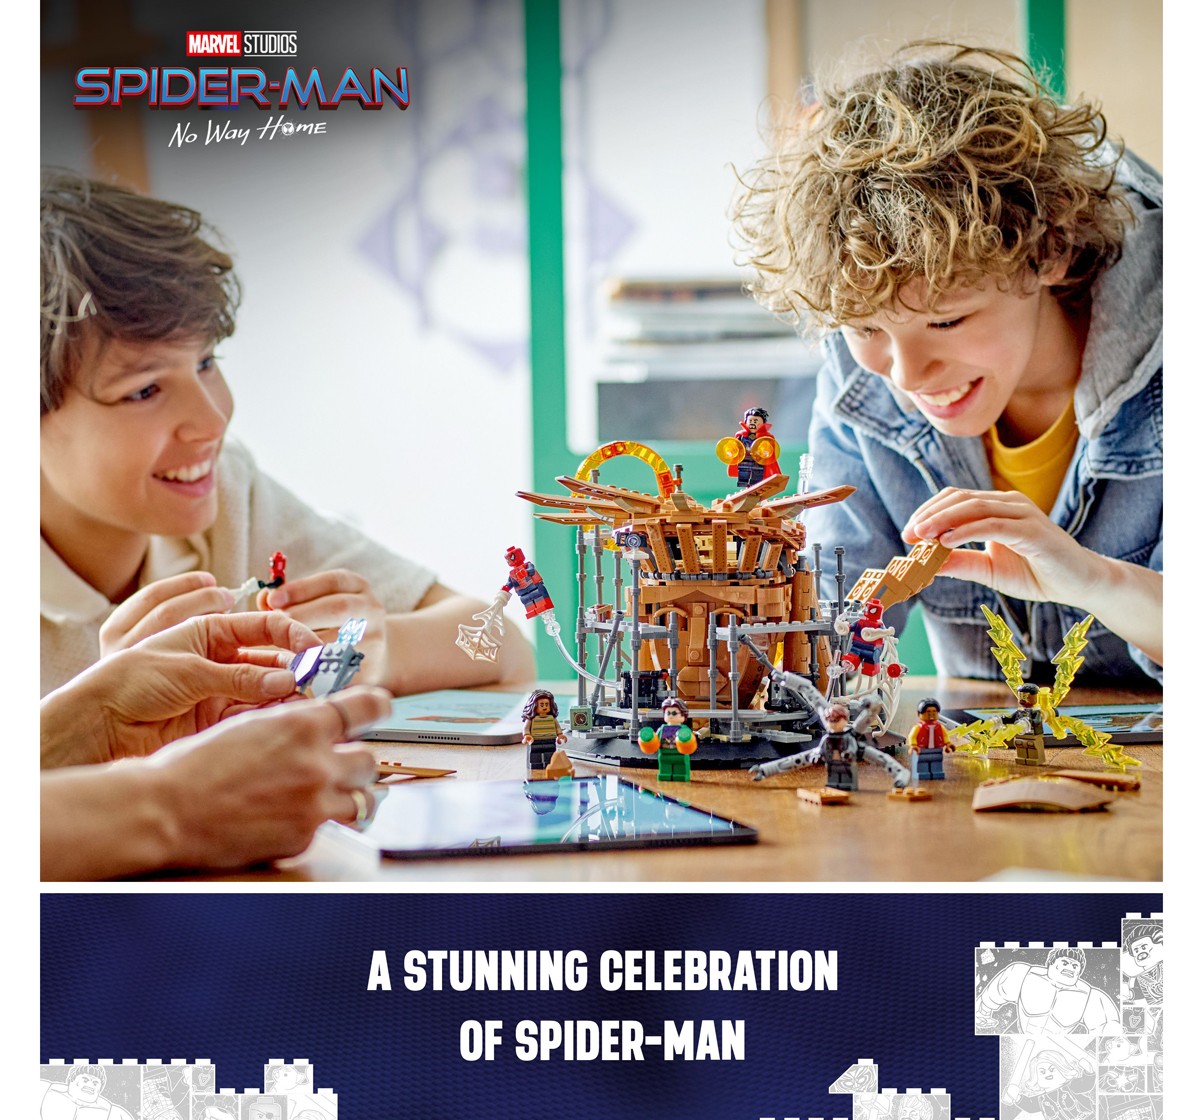 LEGO Marvel Spider-Man Final Battle 76261 Building Toy Set (900 Pieces), 10Y+